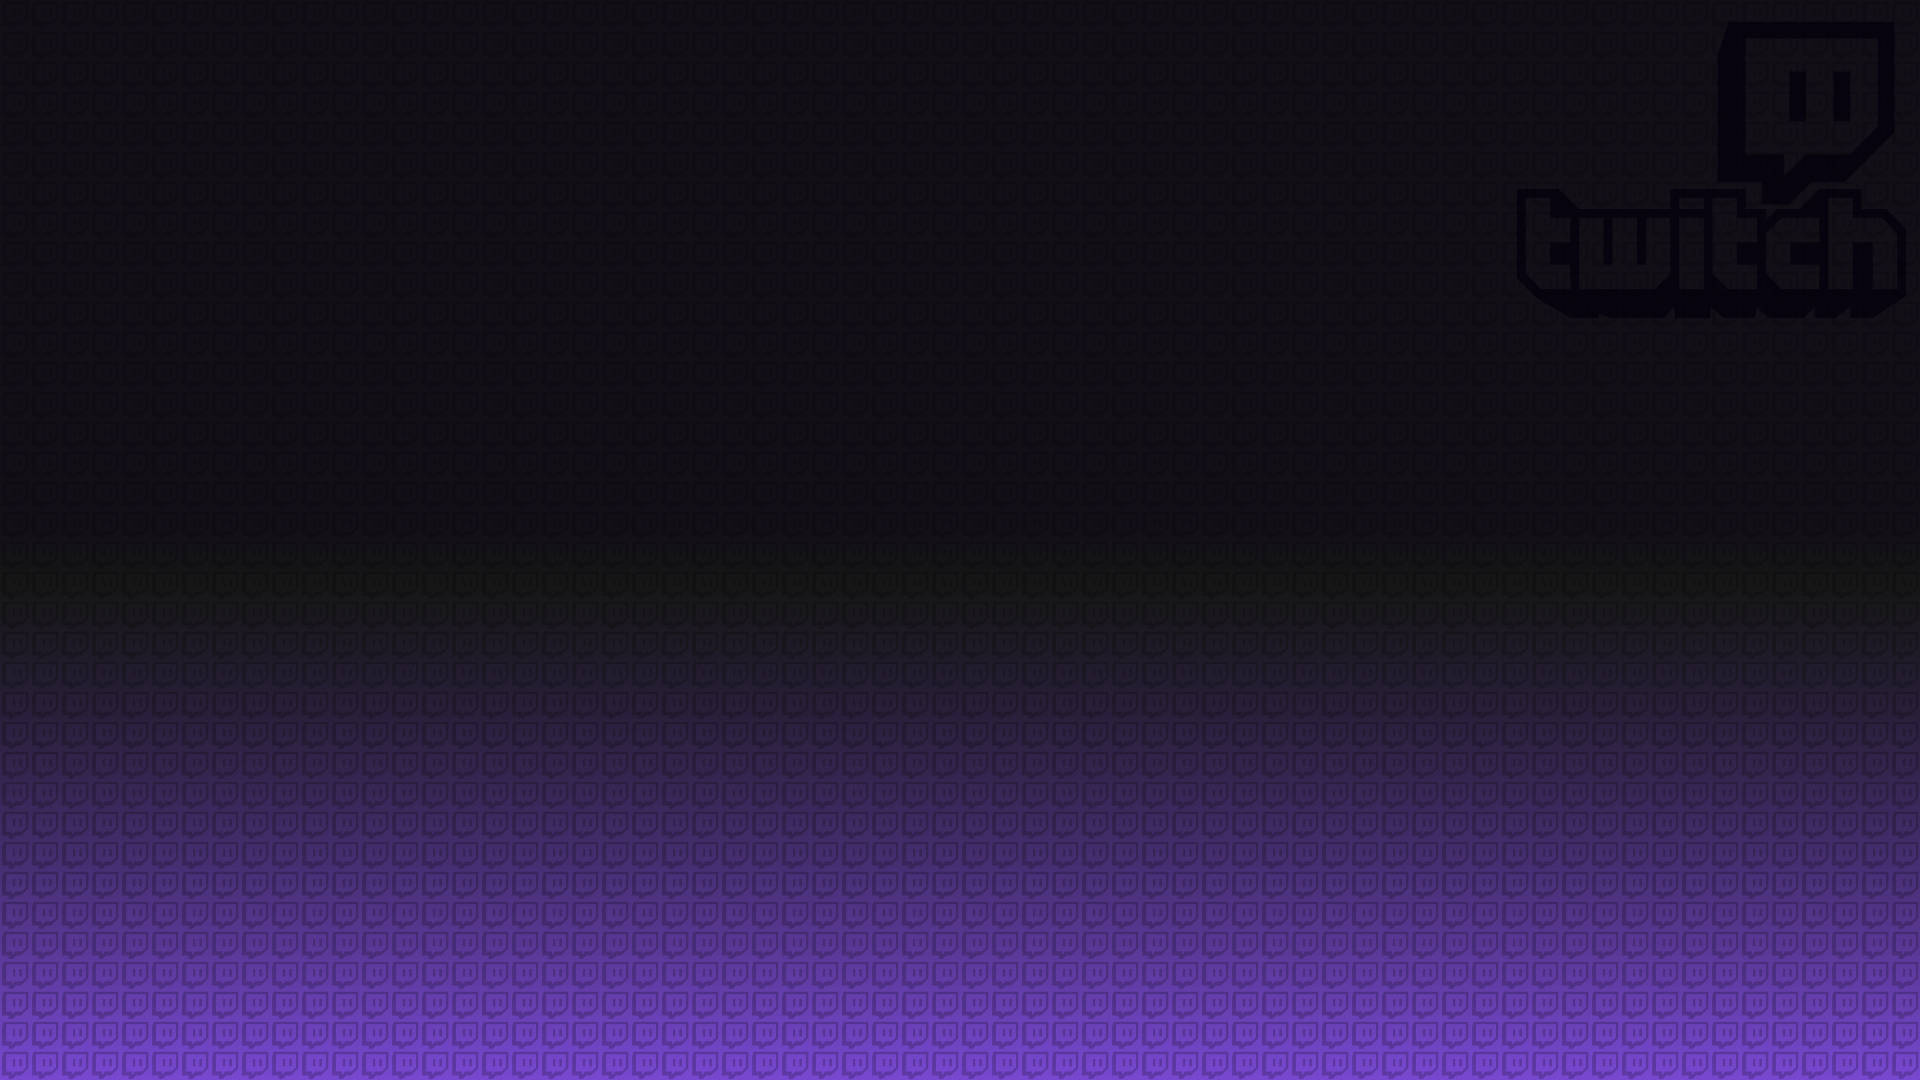 Twitch Video Games Texture Minimalism Black Purple 1920x1080